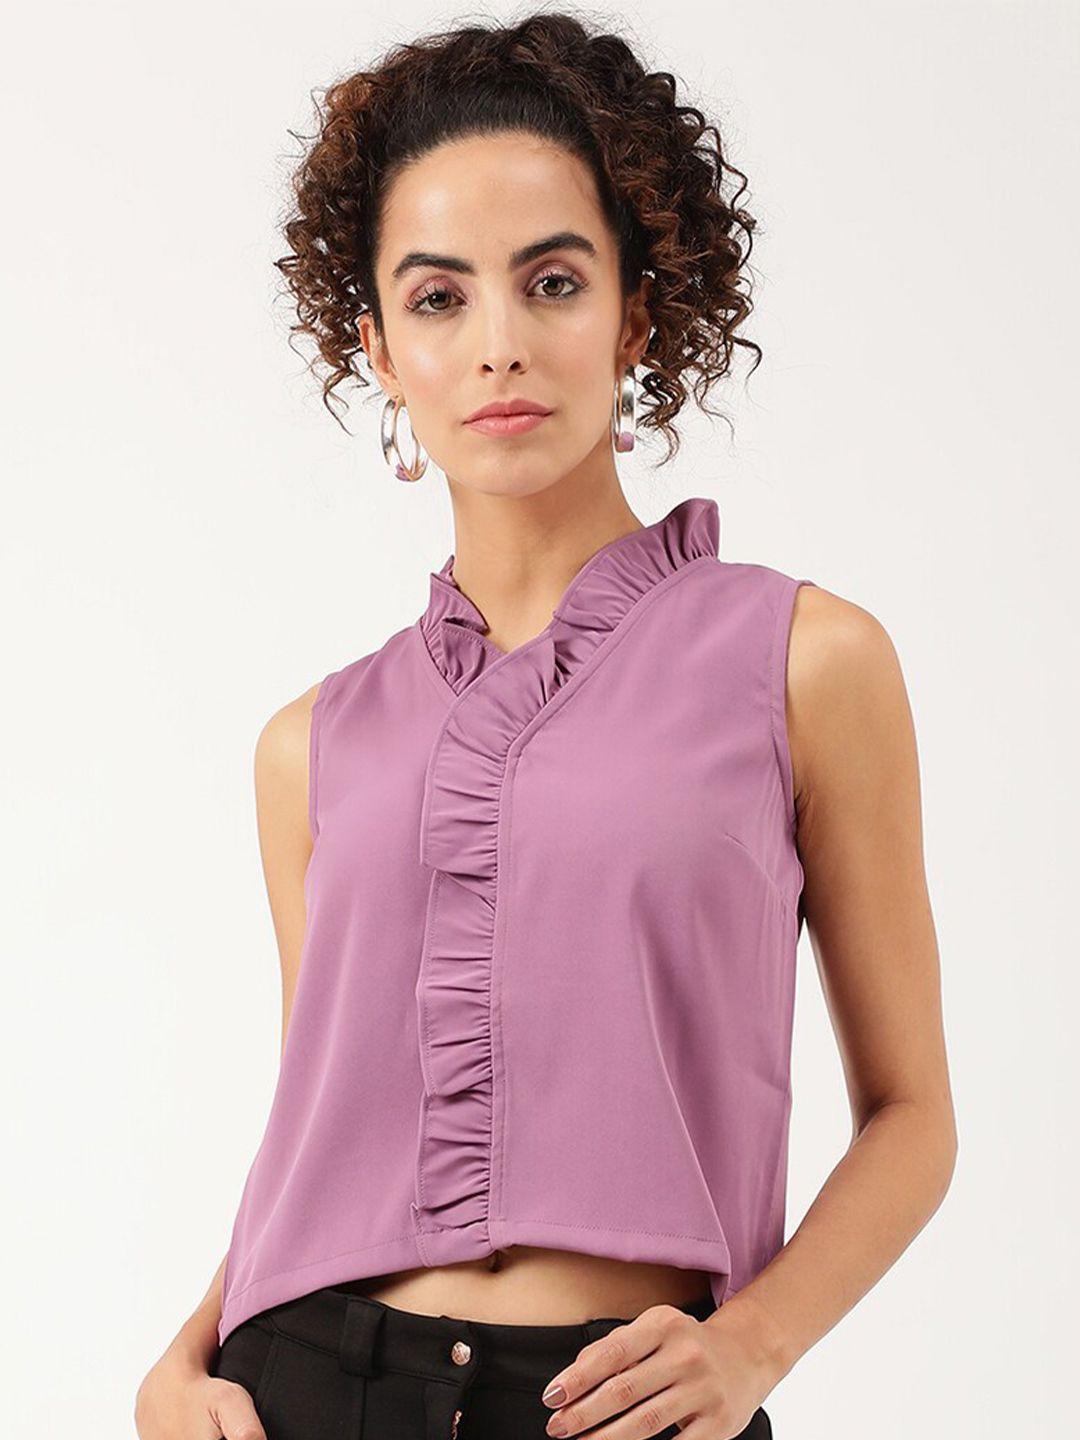 centrestage purple mandarin collar shirt style crop top